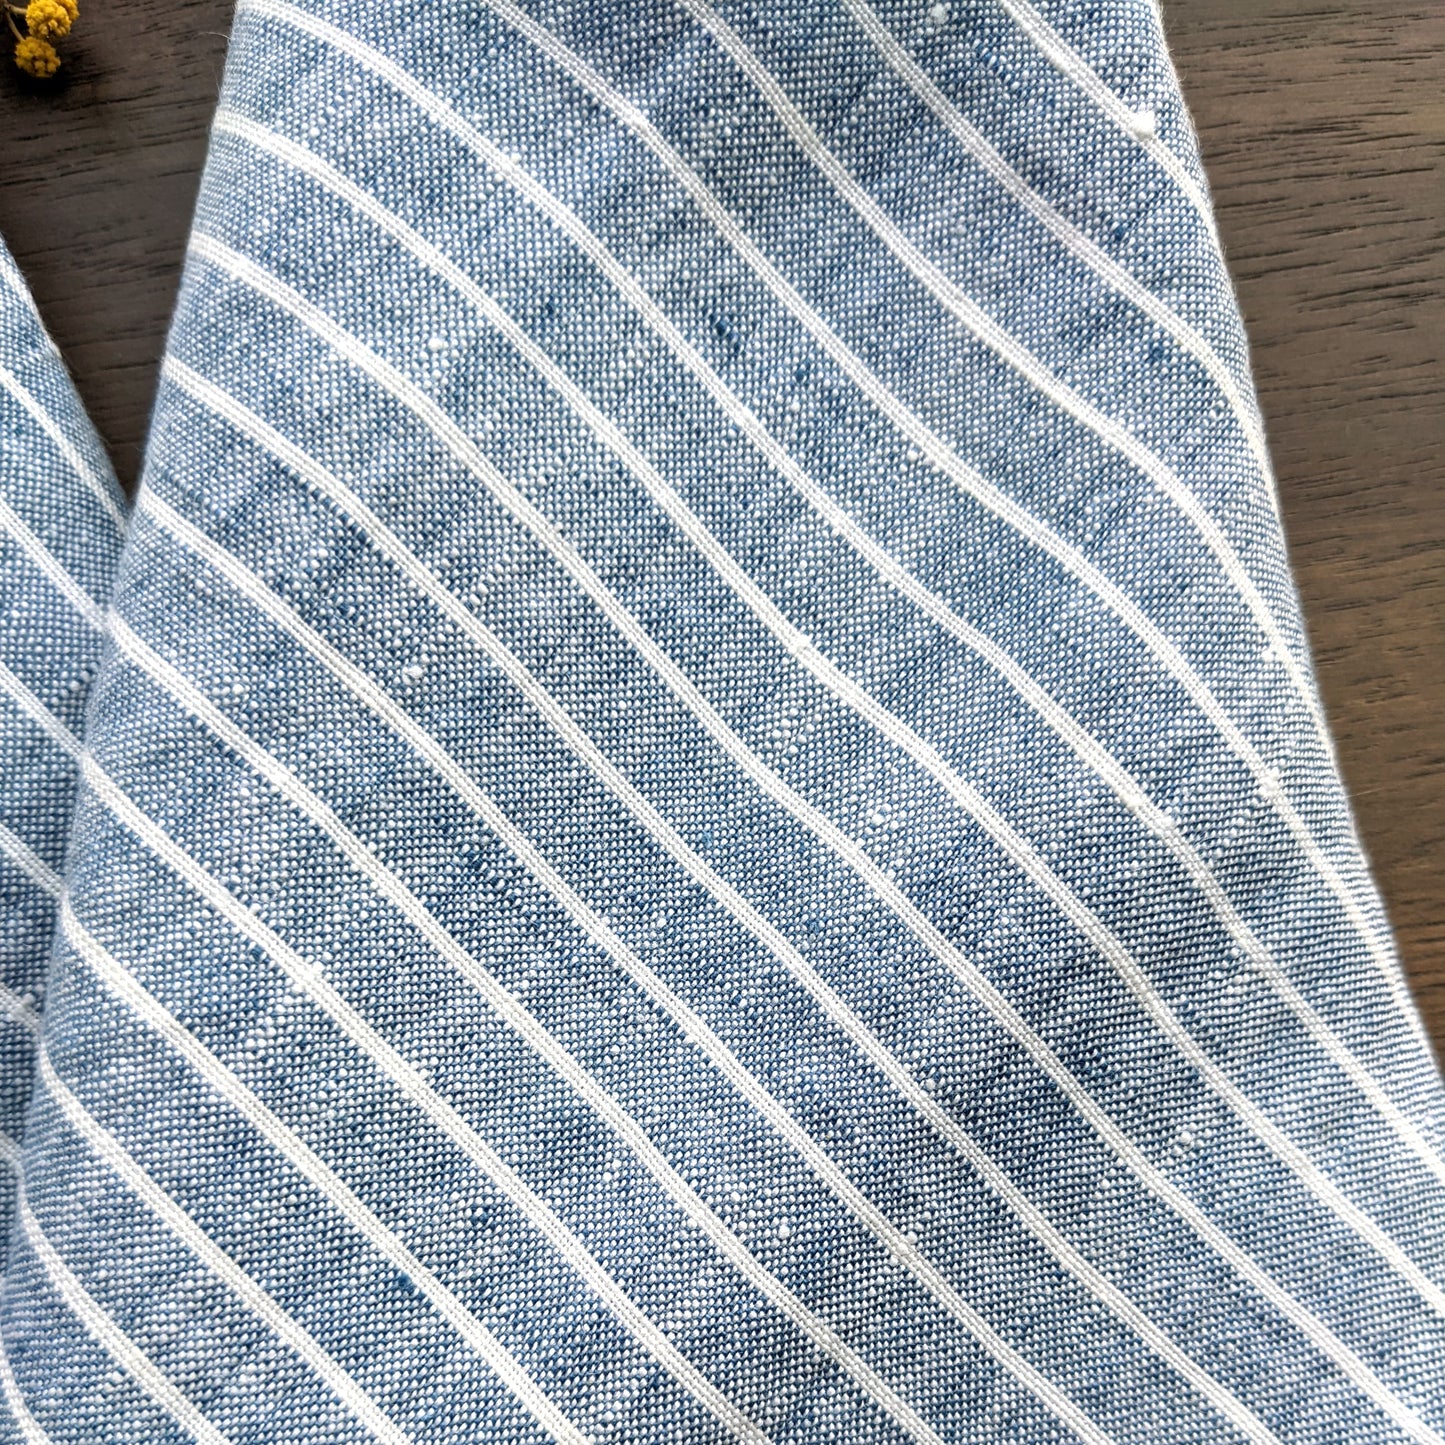 Set of 4 Striped napkins - French blue - French Address